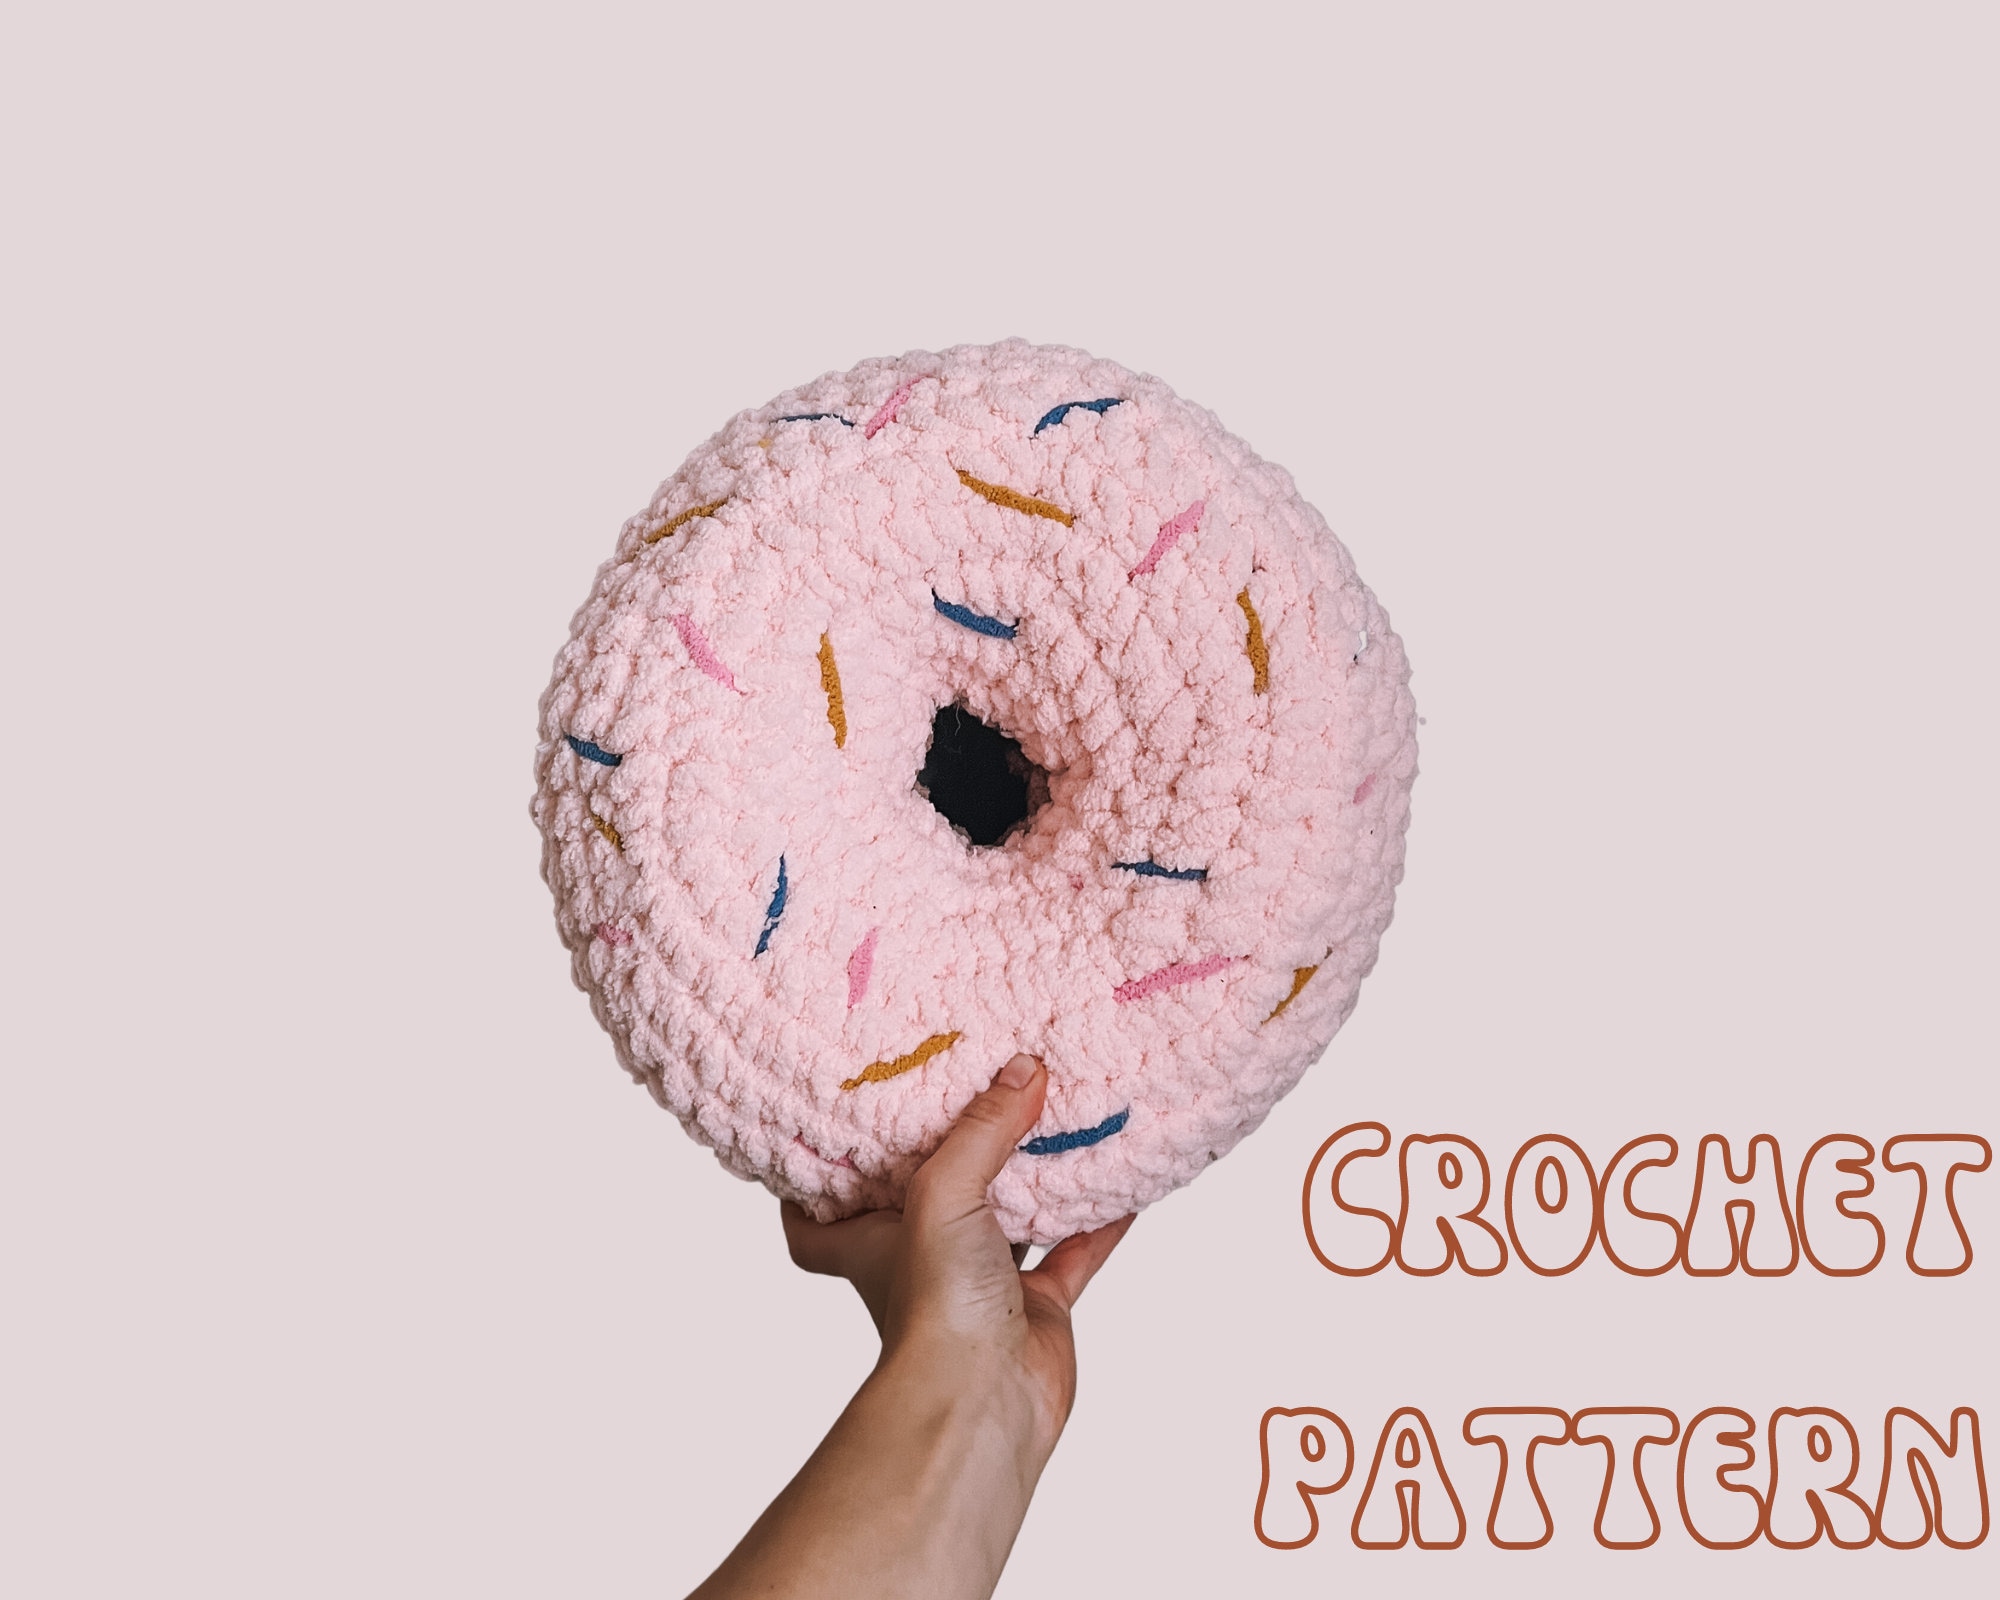 Donut Pillow Addi Express Kingsize Circular Knitting Machine